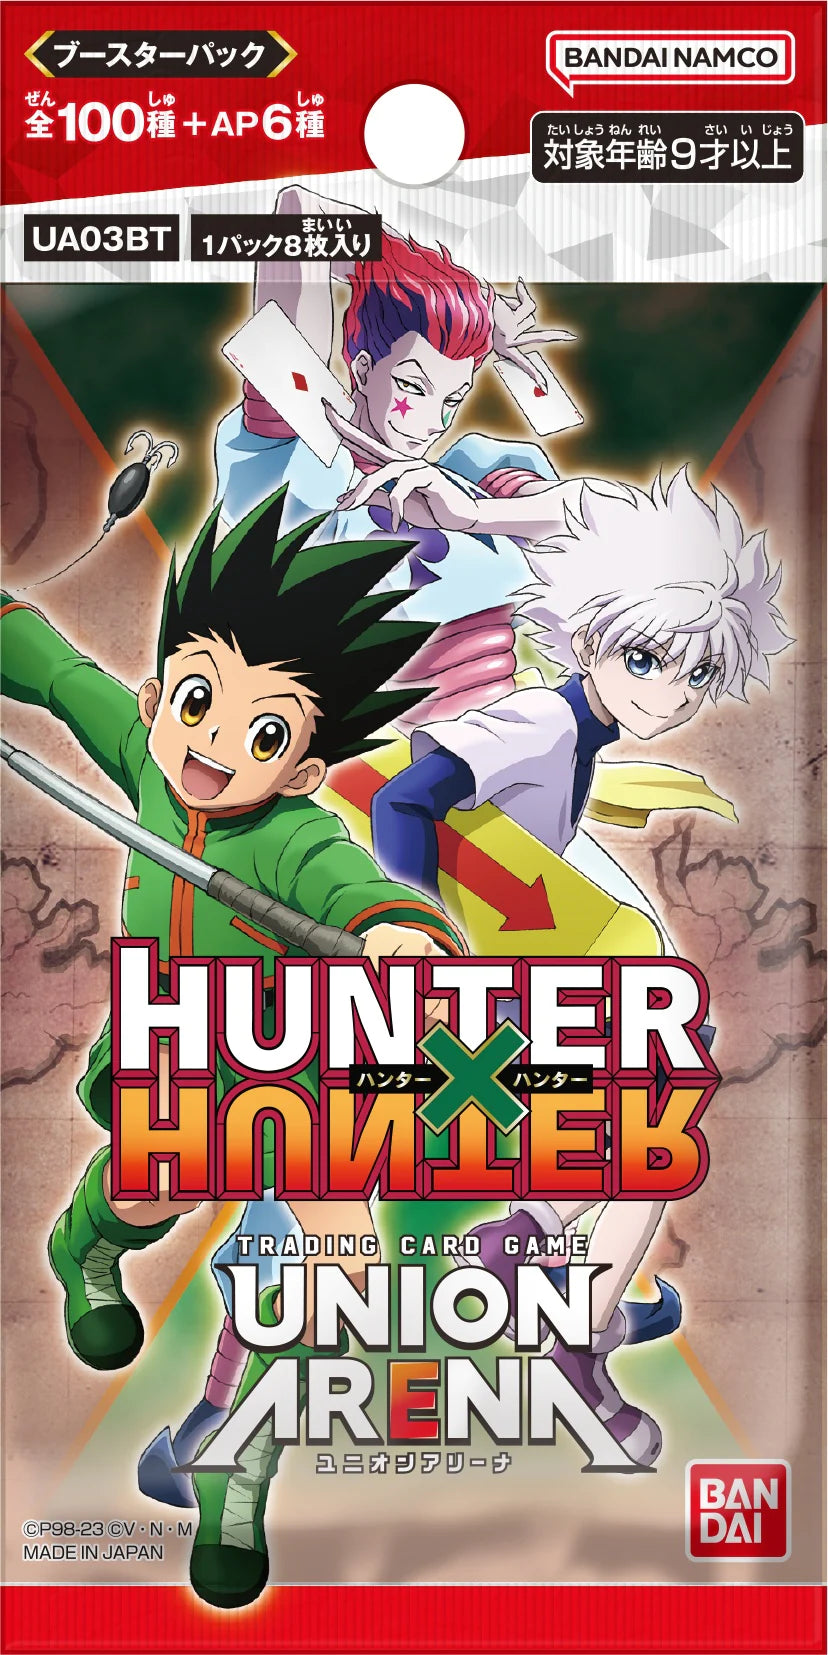 Union arena card game [Hunter x Hunter] [booster box]